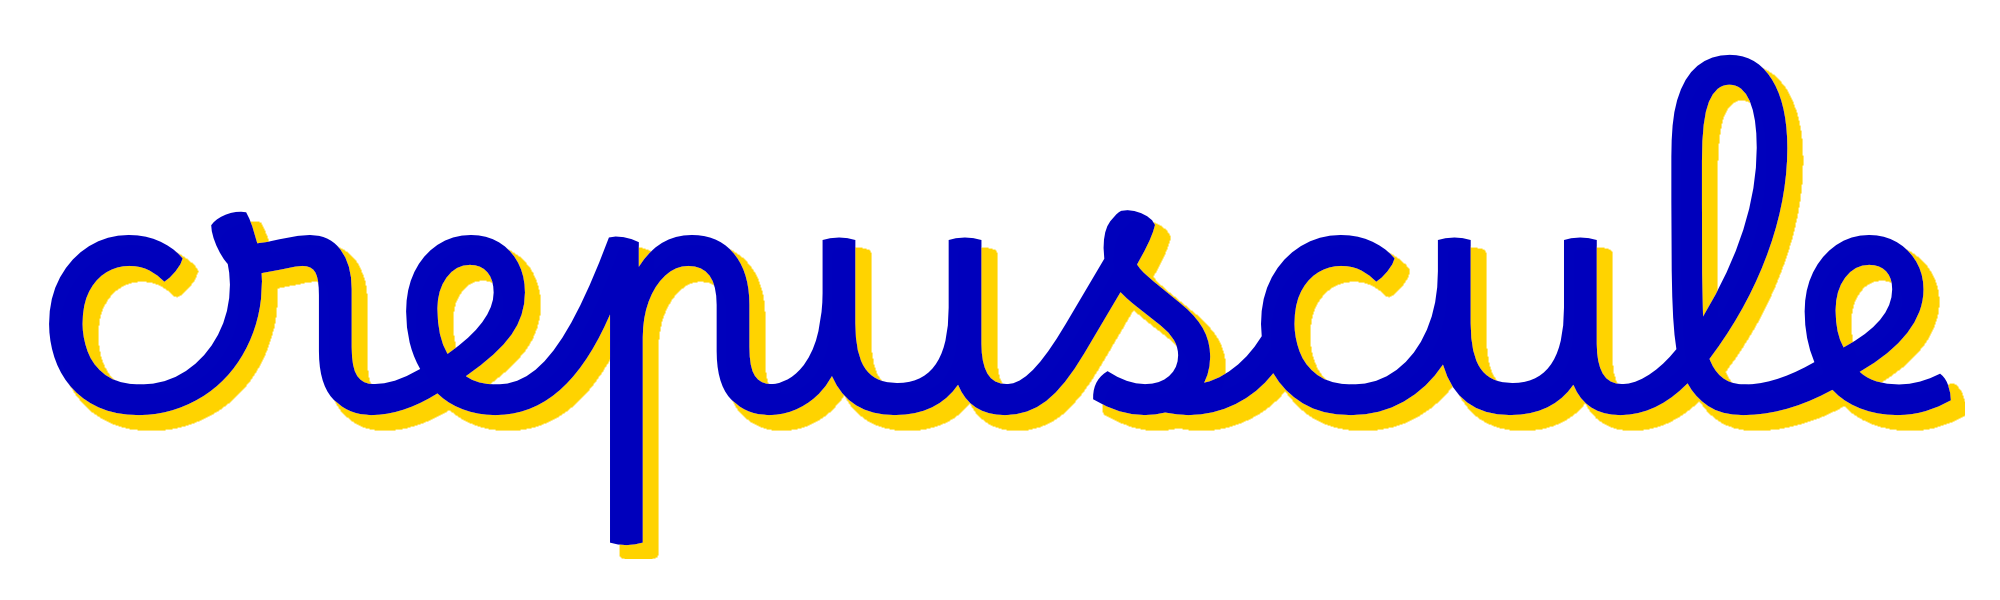 crepuscule logo